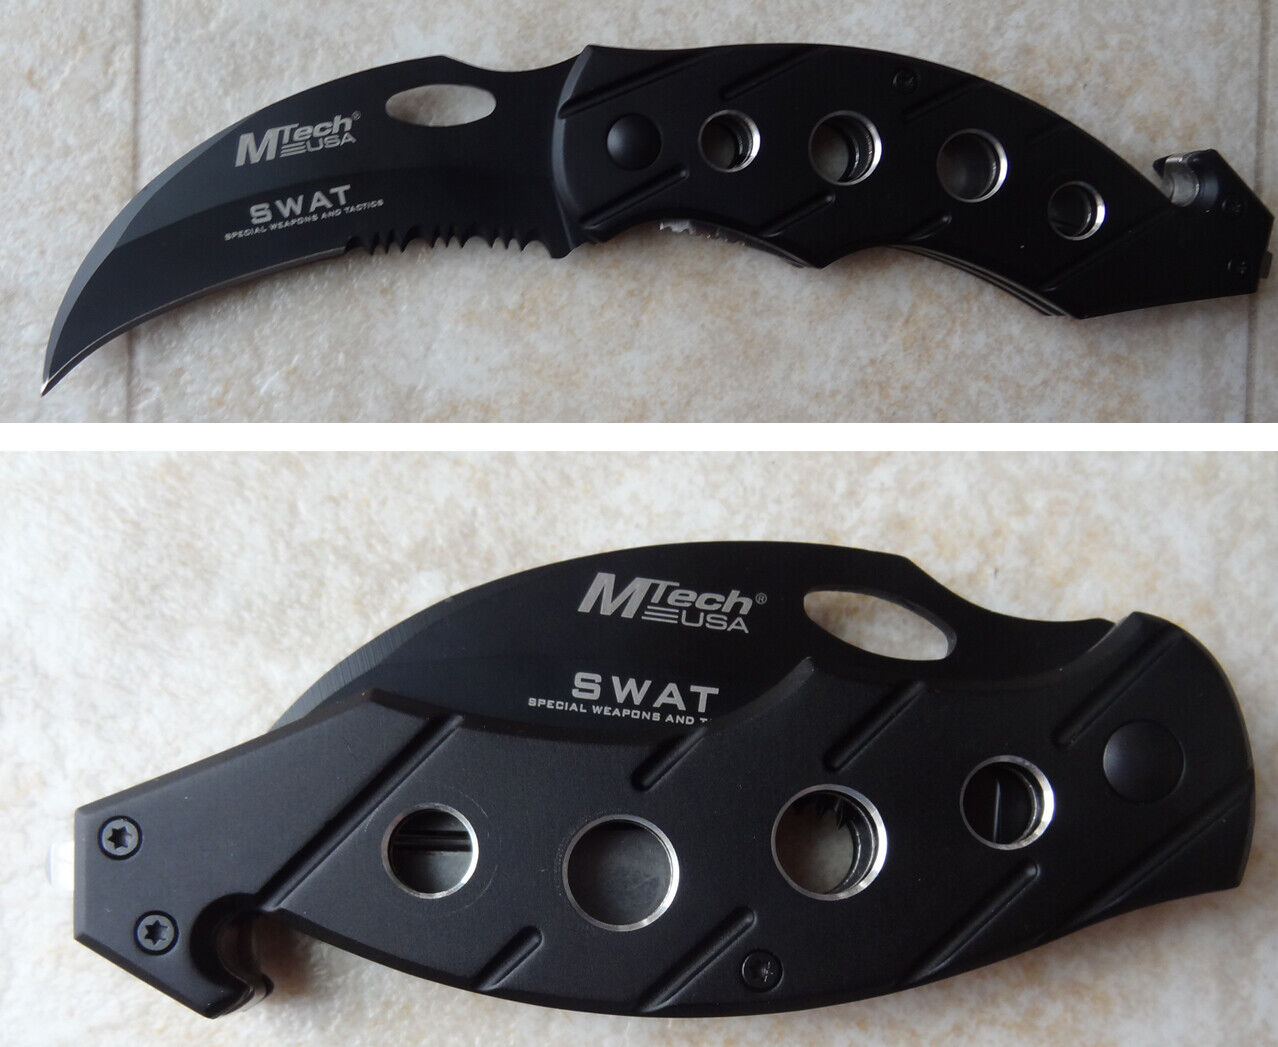 New MTech SWAT Karambit Black Hawk Tactical Folding Pocket Knife